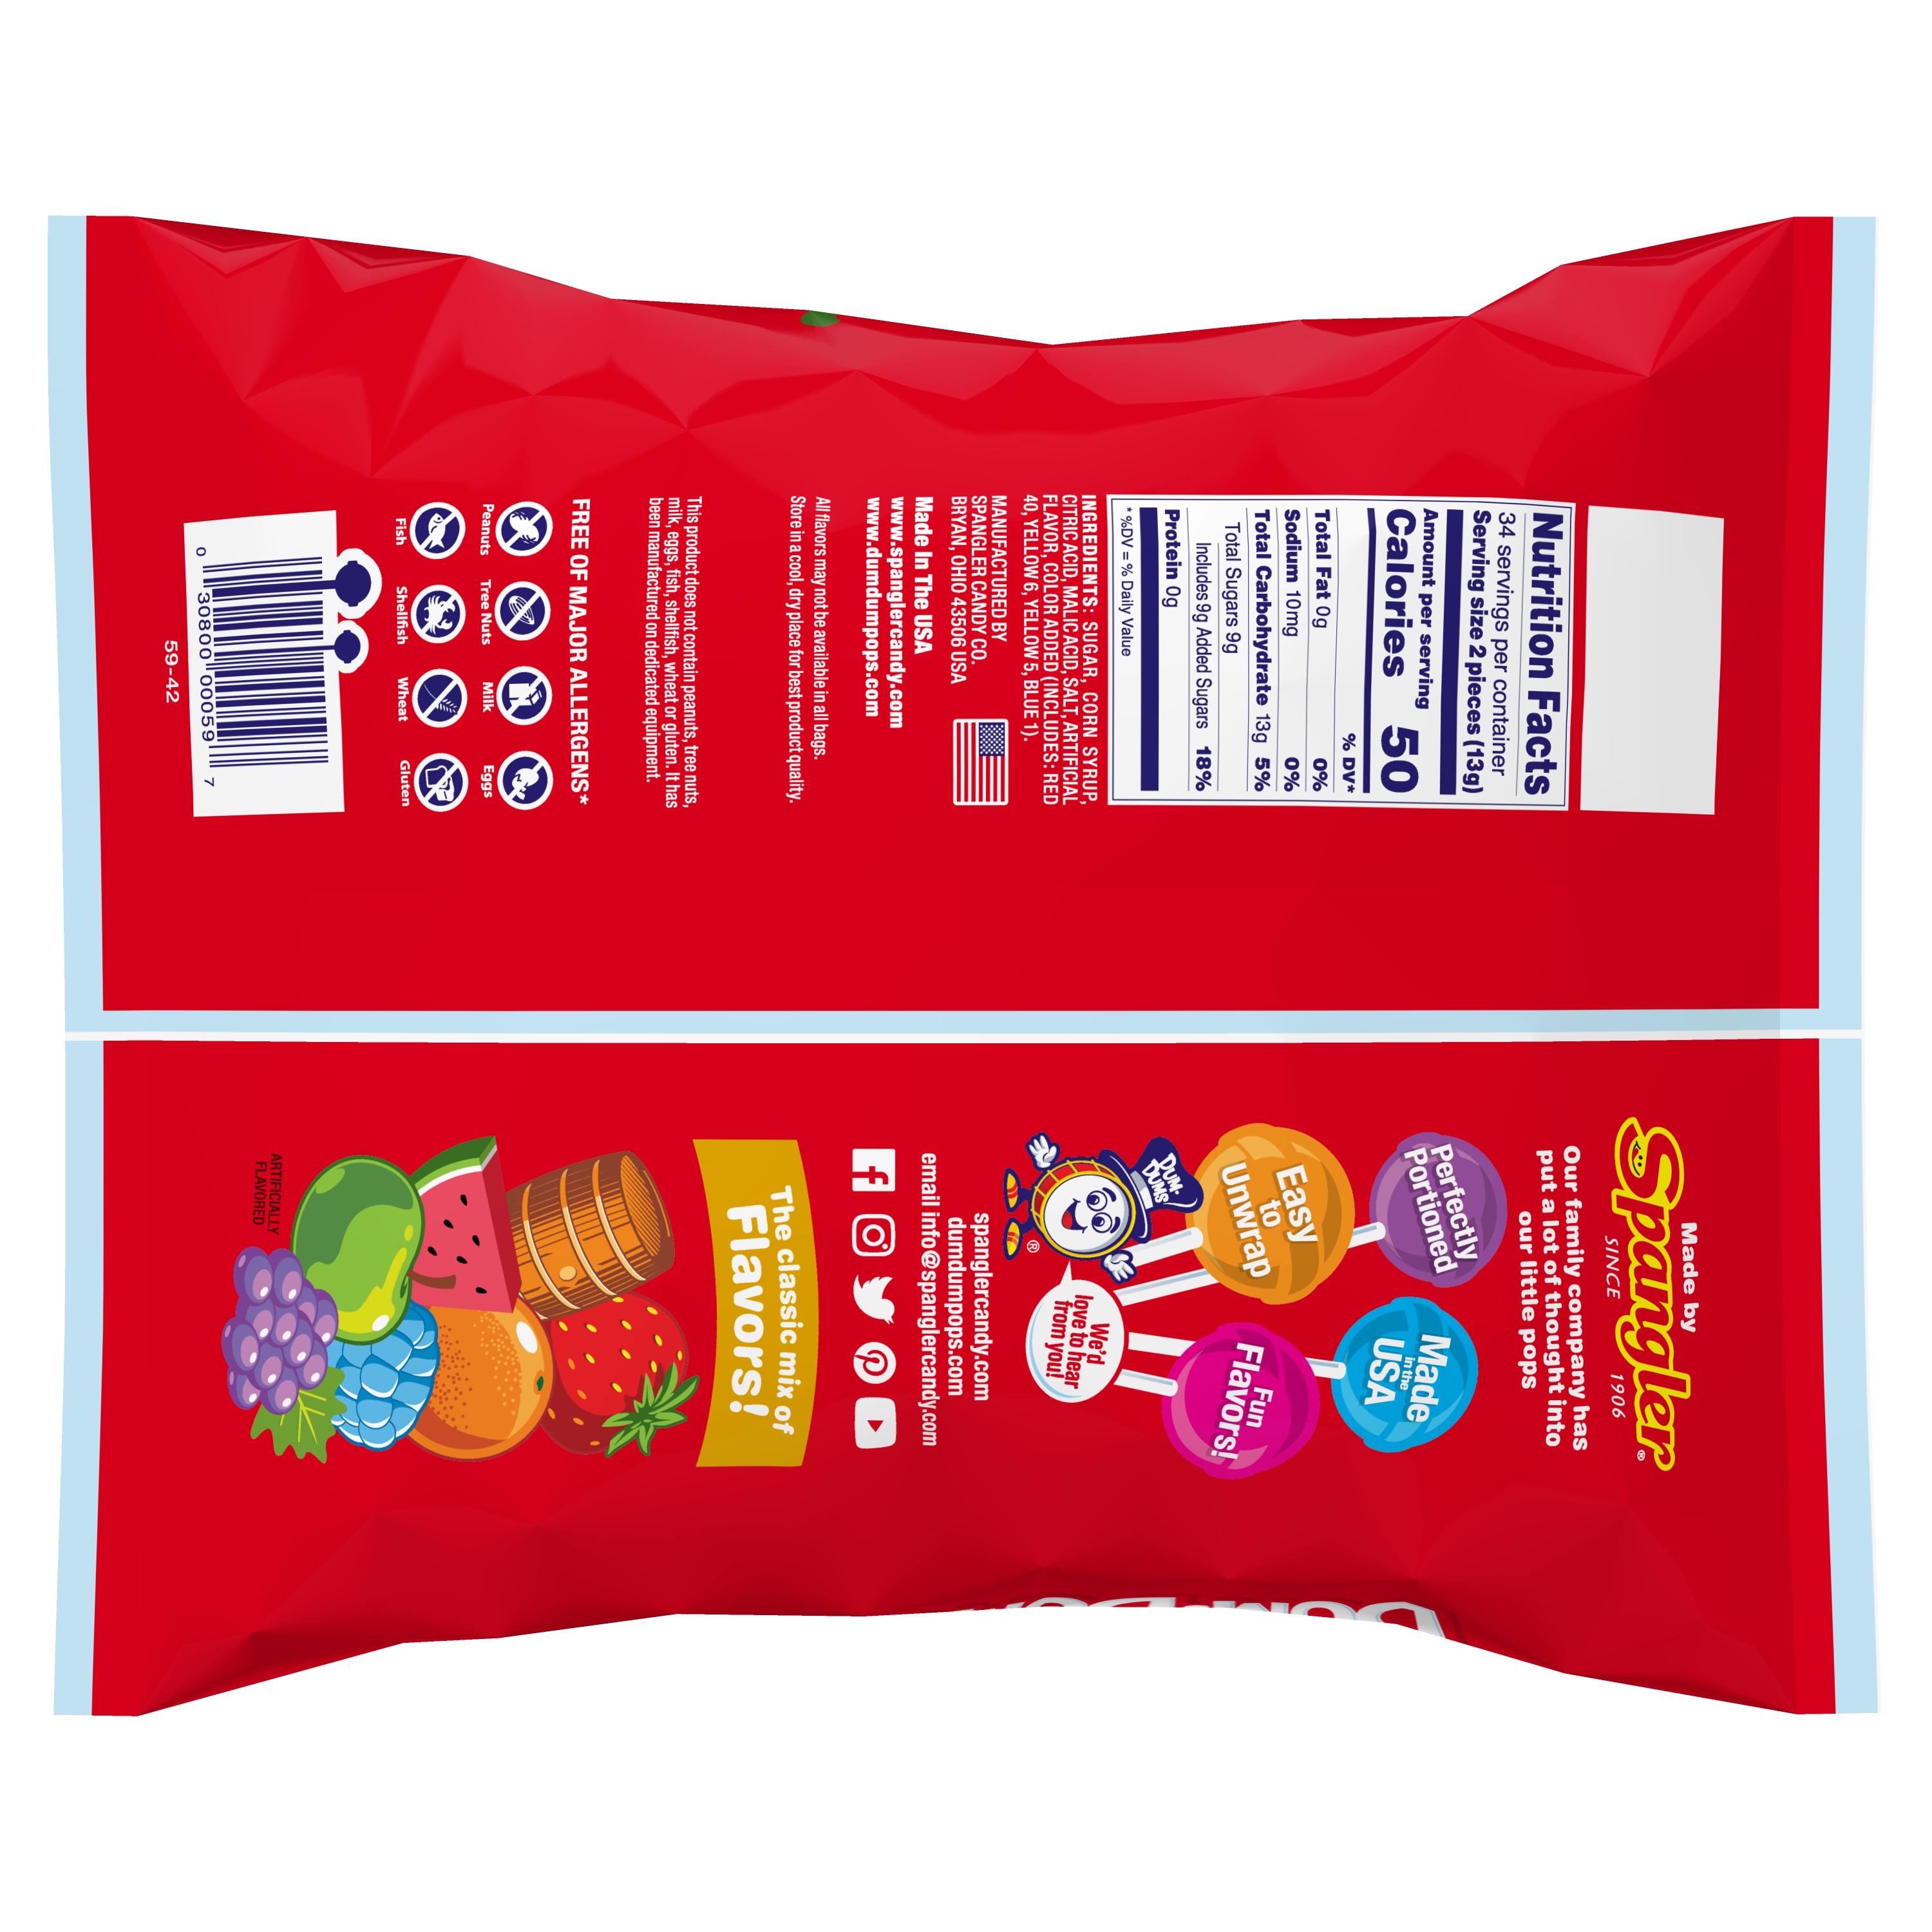 Dum Dums Free of Major Allergens Original Flavor Mix Lollipops, Party Candy, 16 oz. Bag - image 3 of 8